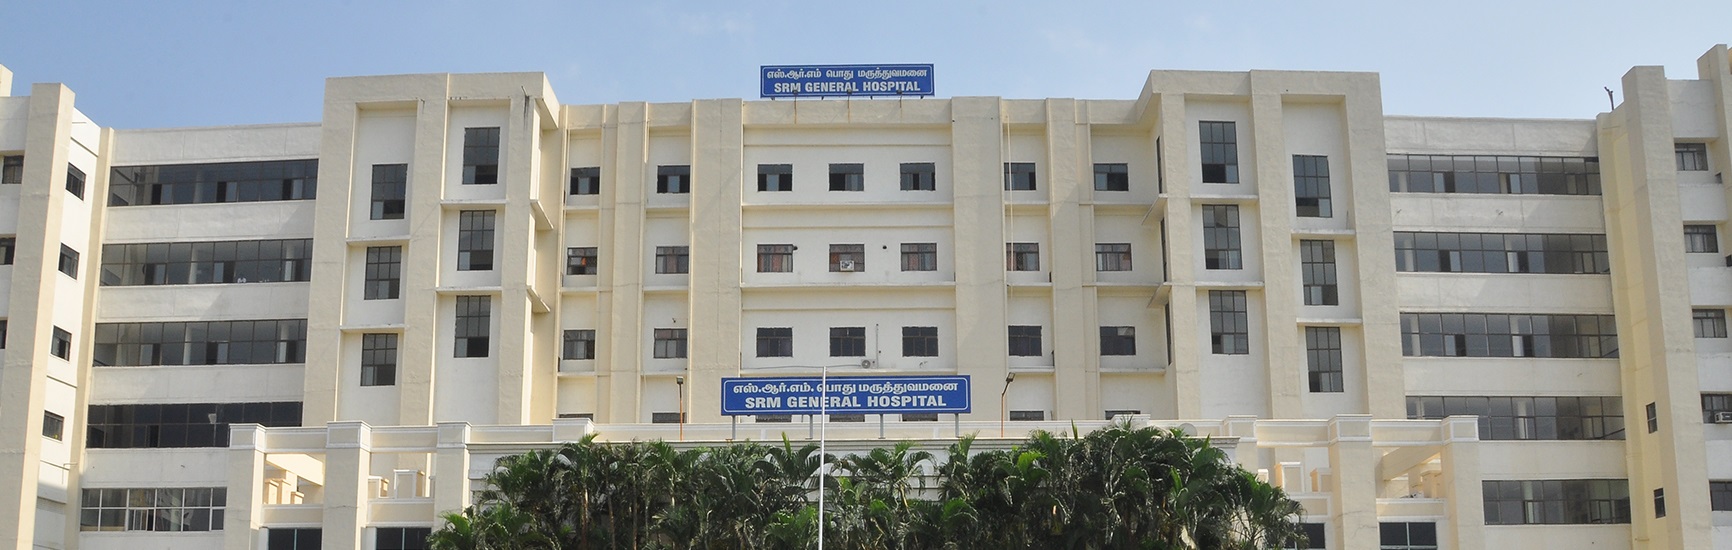 SRM Medical College Hospital and Research Centre, Kattankulathur.